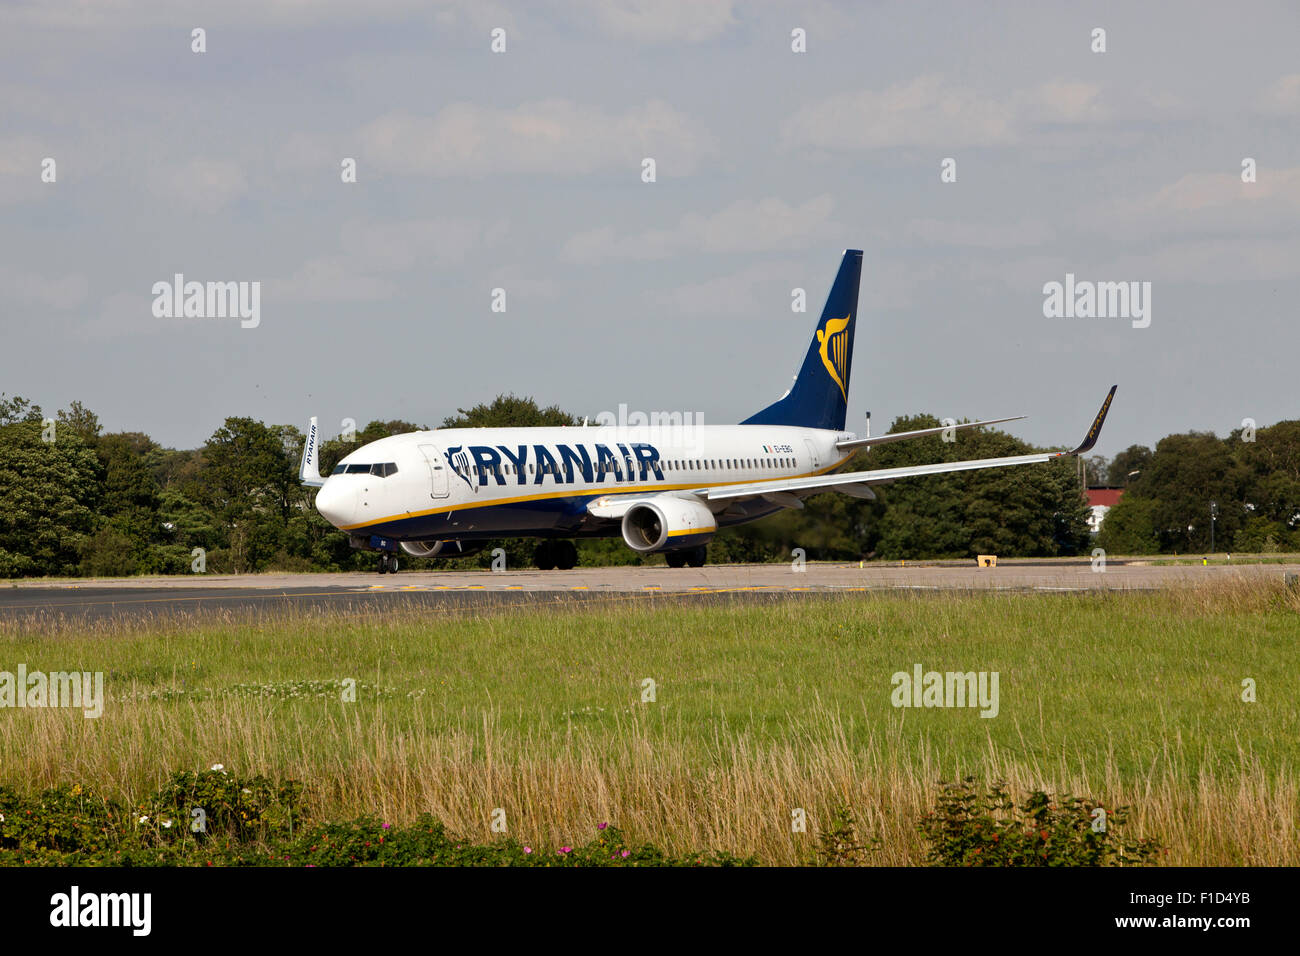 Ryanair Boeing 737-800 aeroplane at Leeds Bradford Airport. Stock Photo